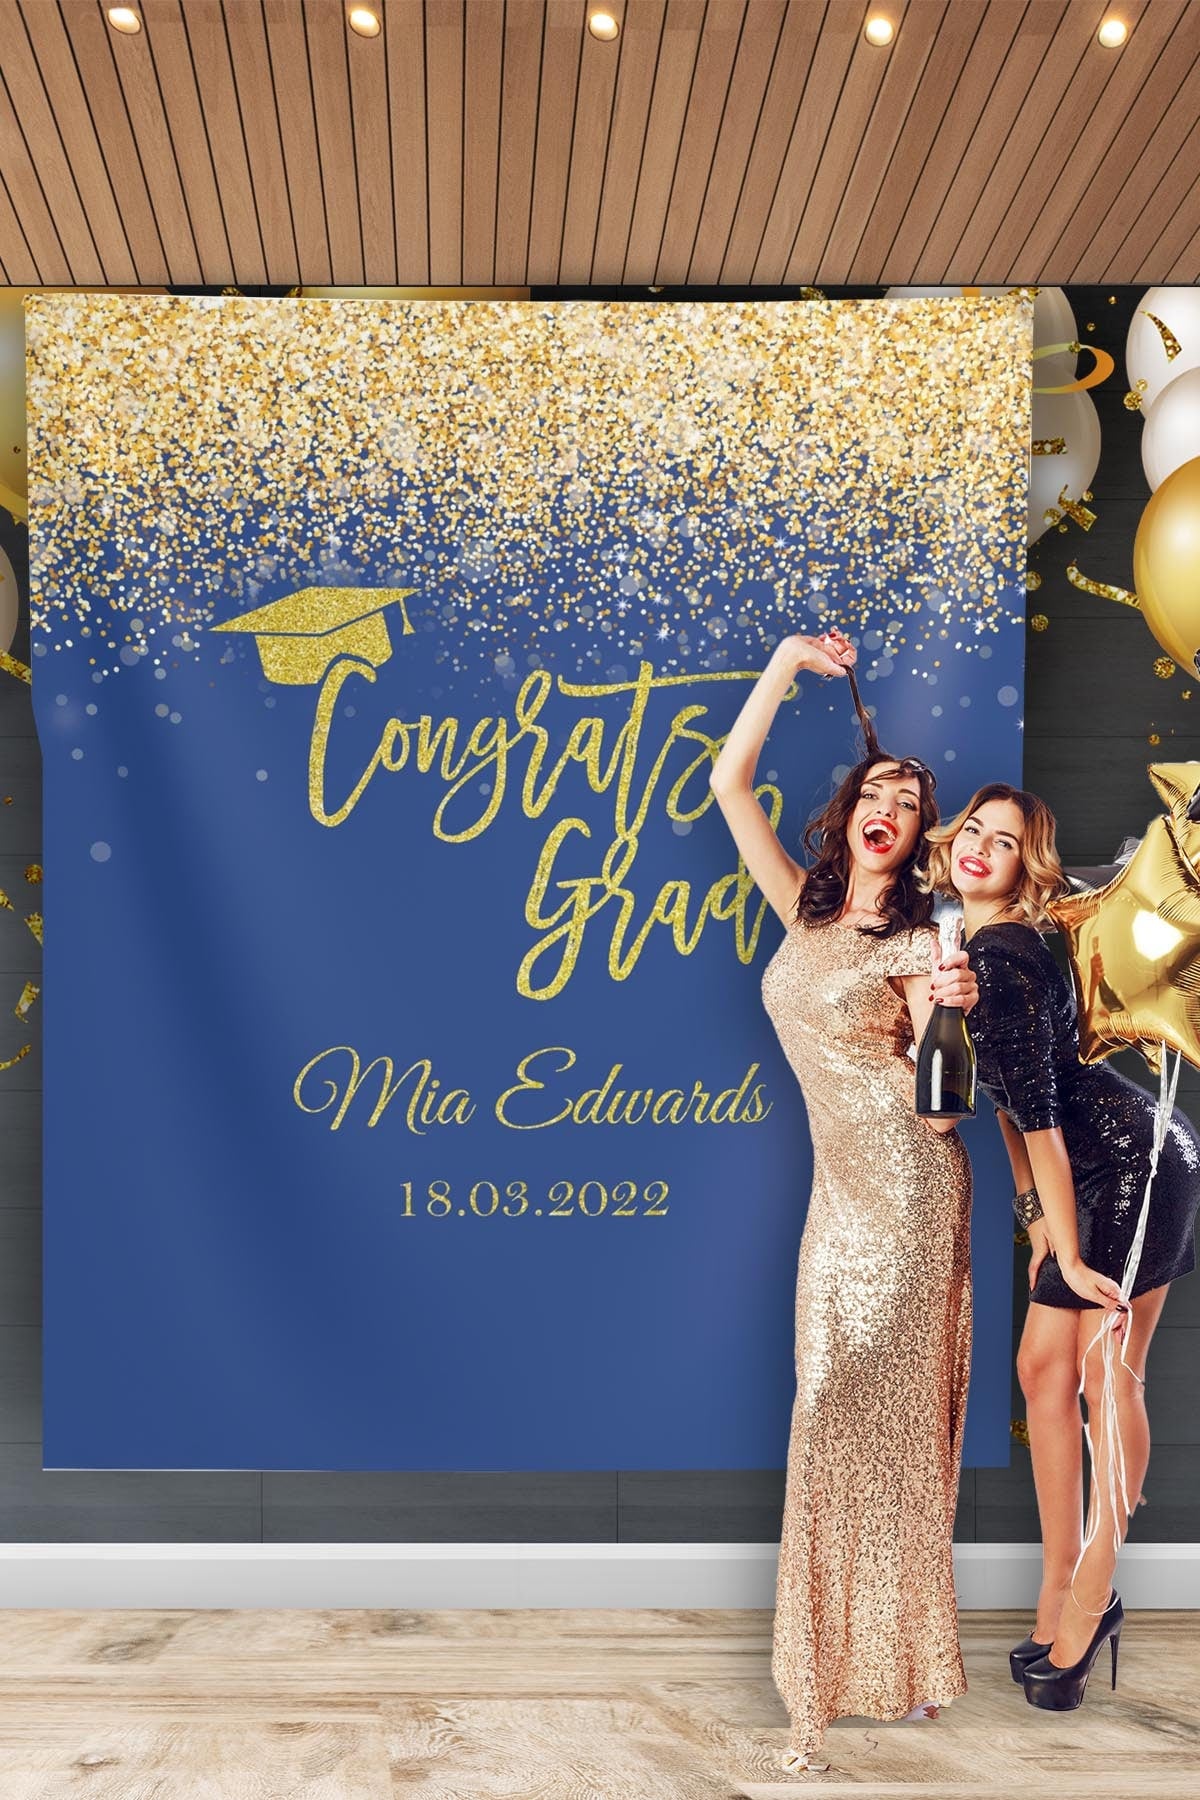 Royal Blue Gold Graduation Backdrop, Congrats Grad Backdrop, Grad Celebration Background, College Grad Party Backdrop, Prom Backdrop 2023